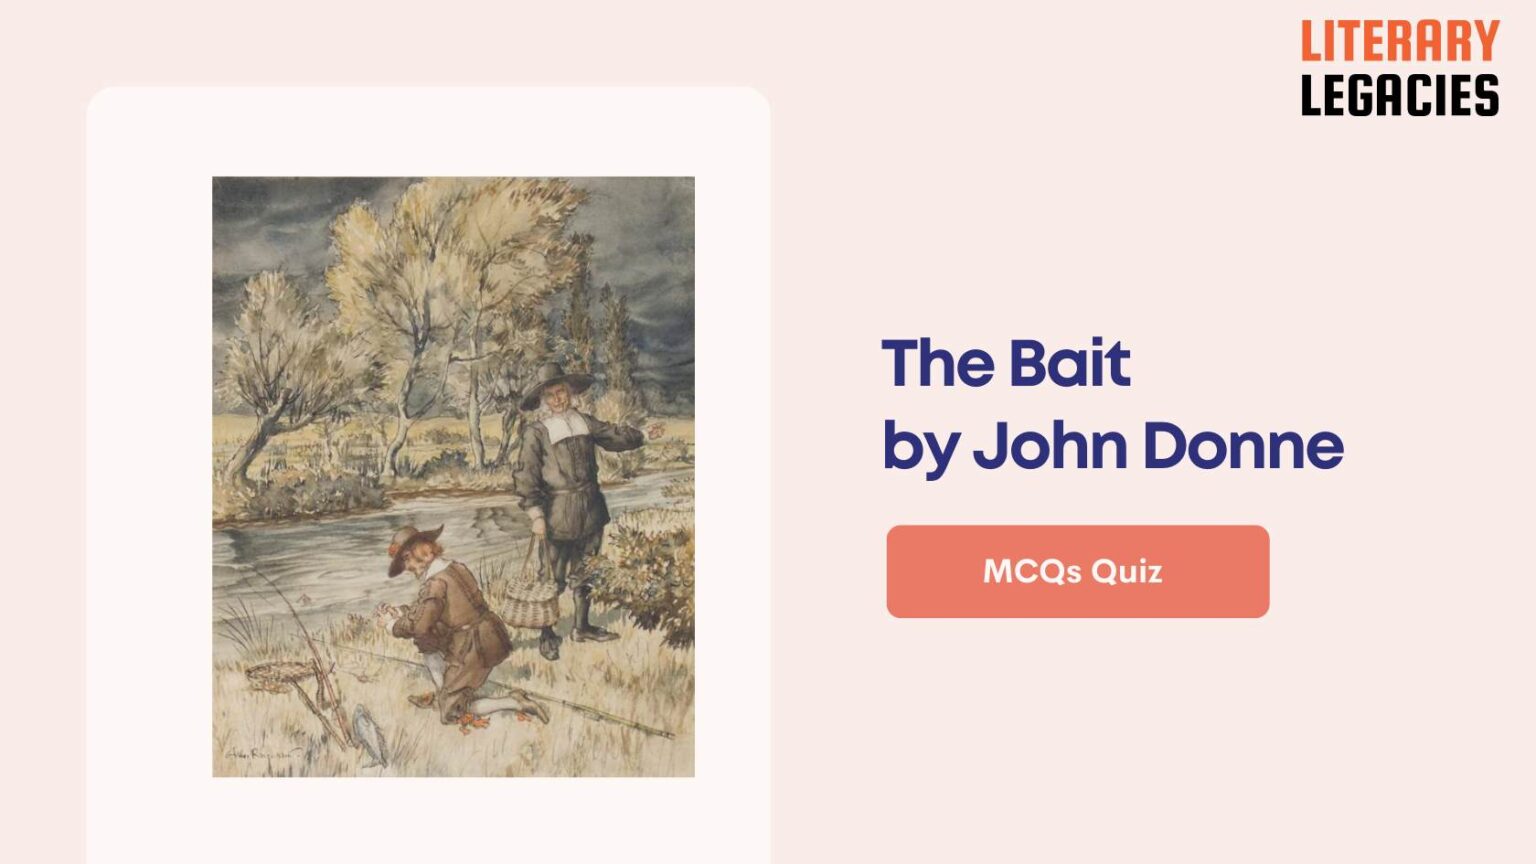 The Bait by John Donne